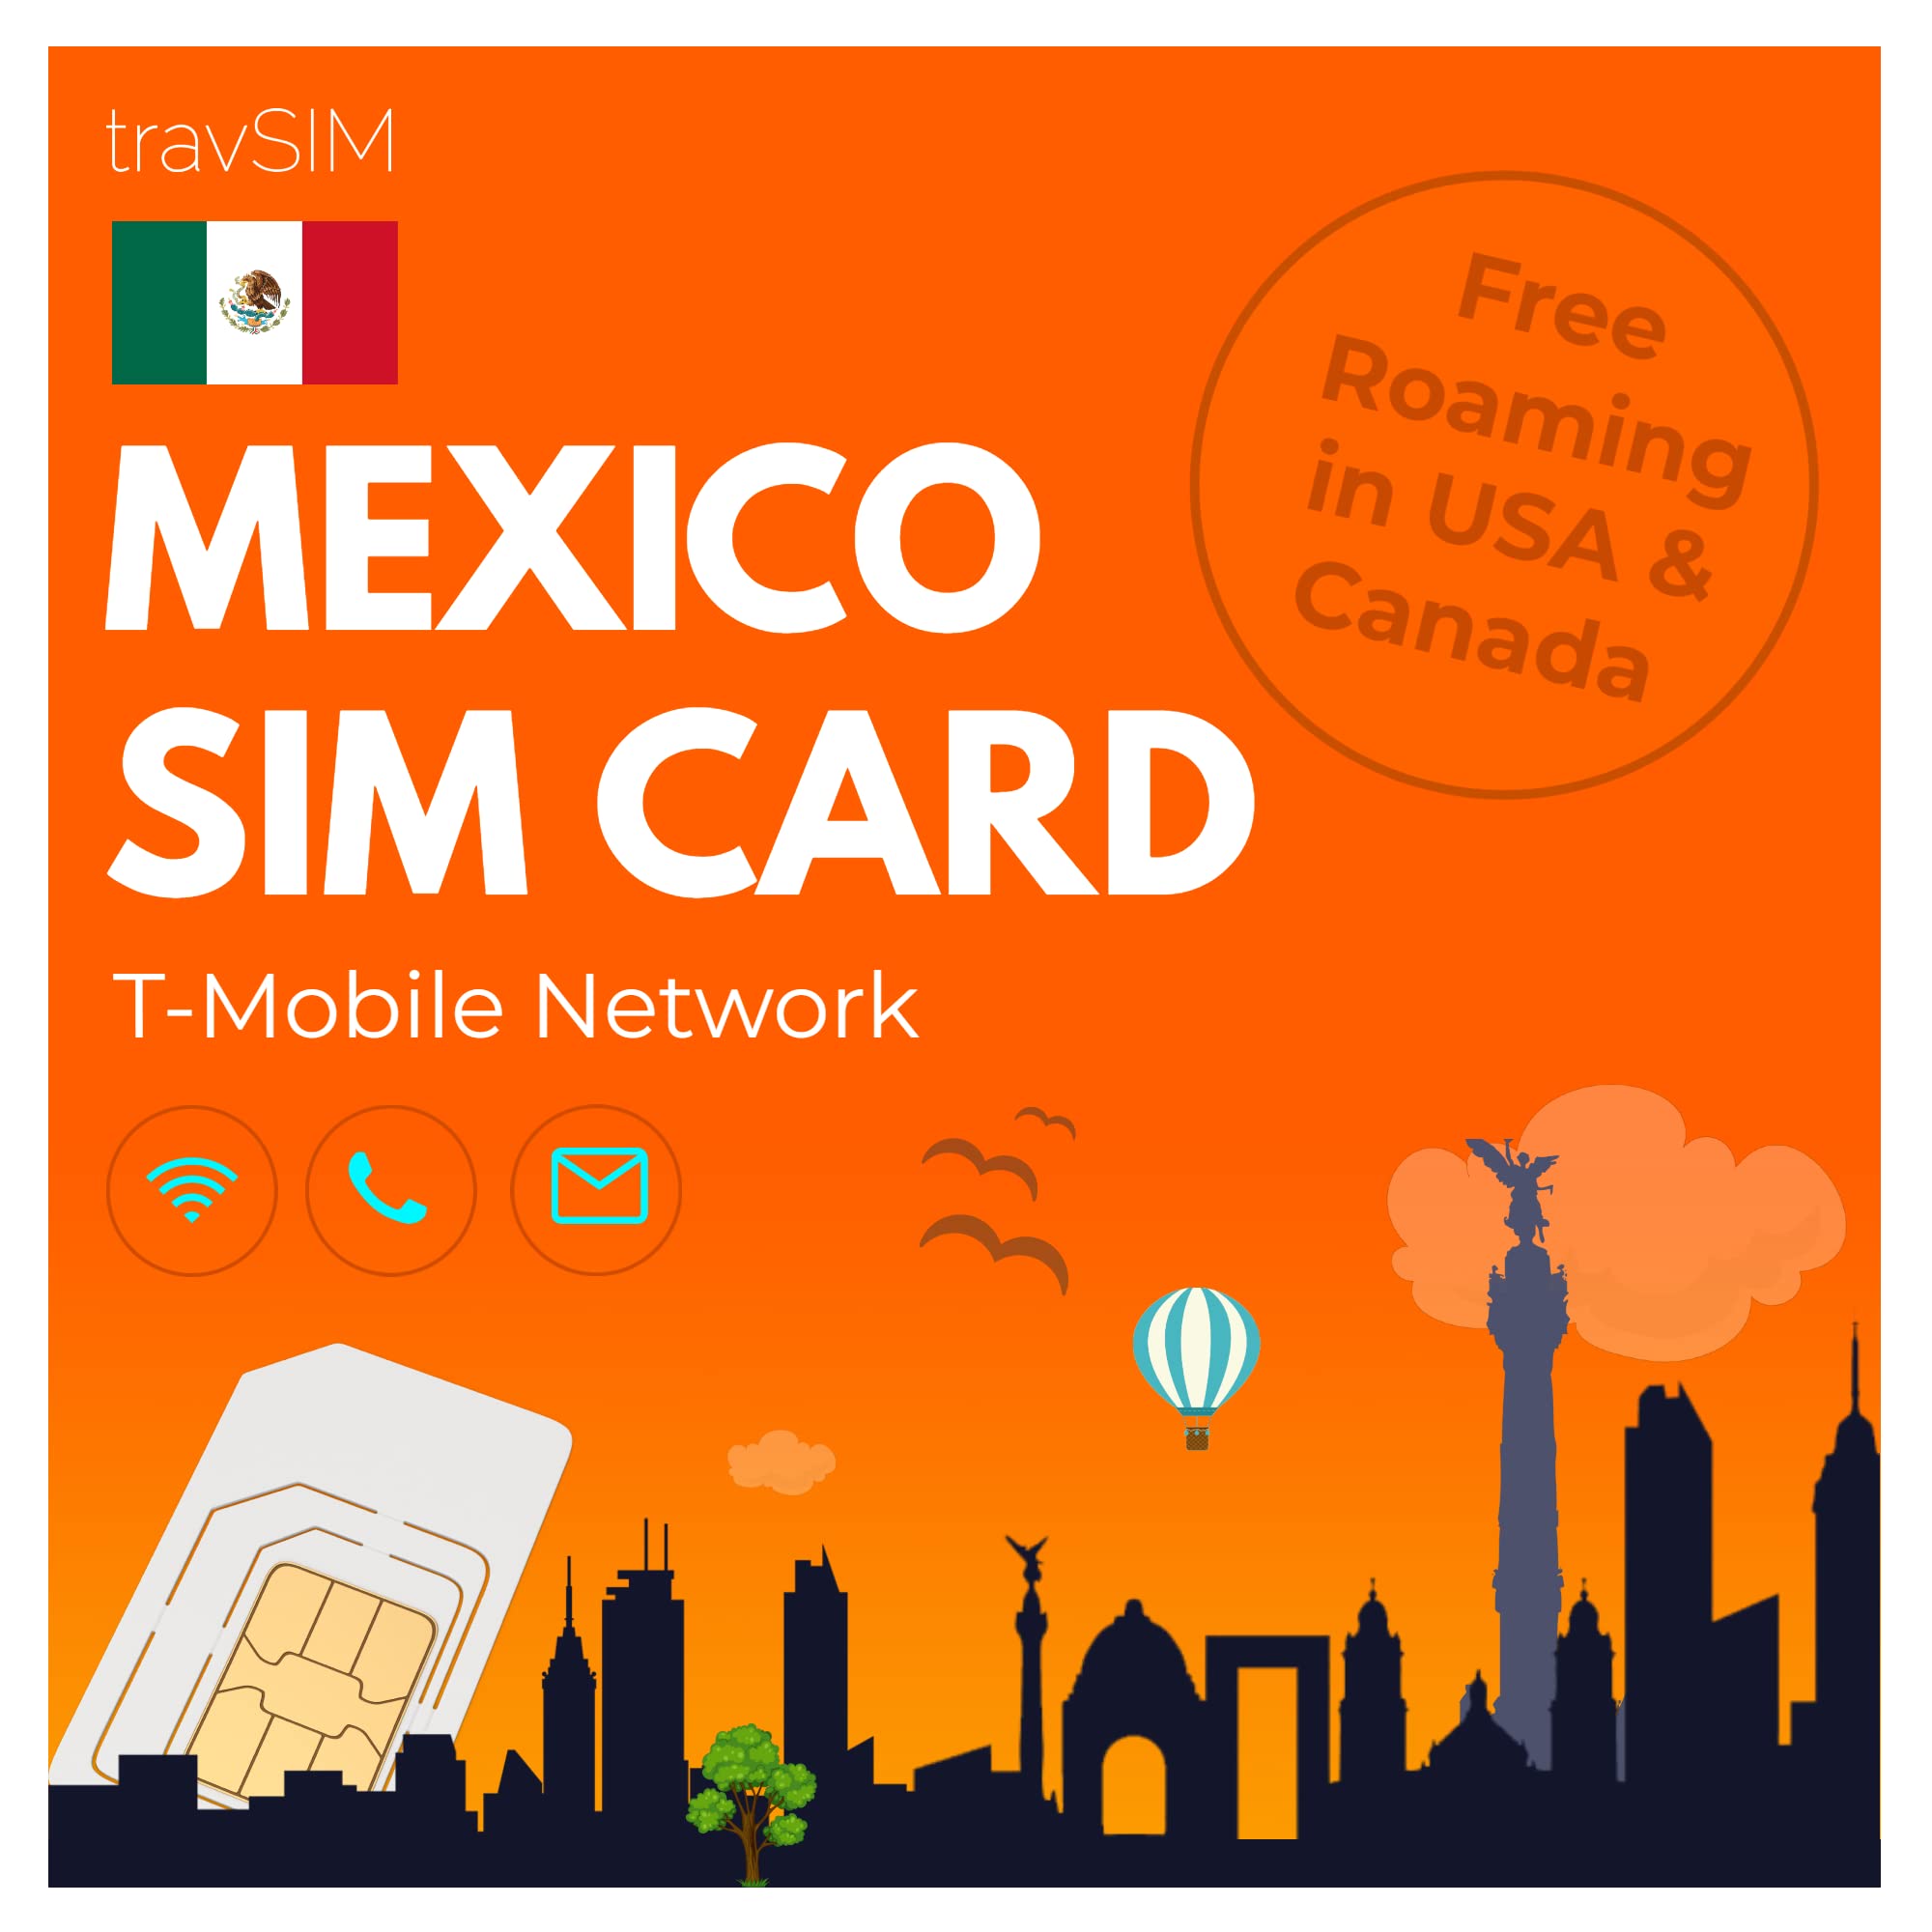 travSIM Mexico SIM Card  T-Mobile Network  5GB Mobile Data  Free Roaming USA & Canada  Mexico SIM Card Prepaid has Unlimited Nat